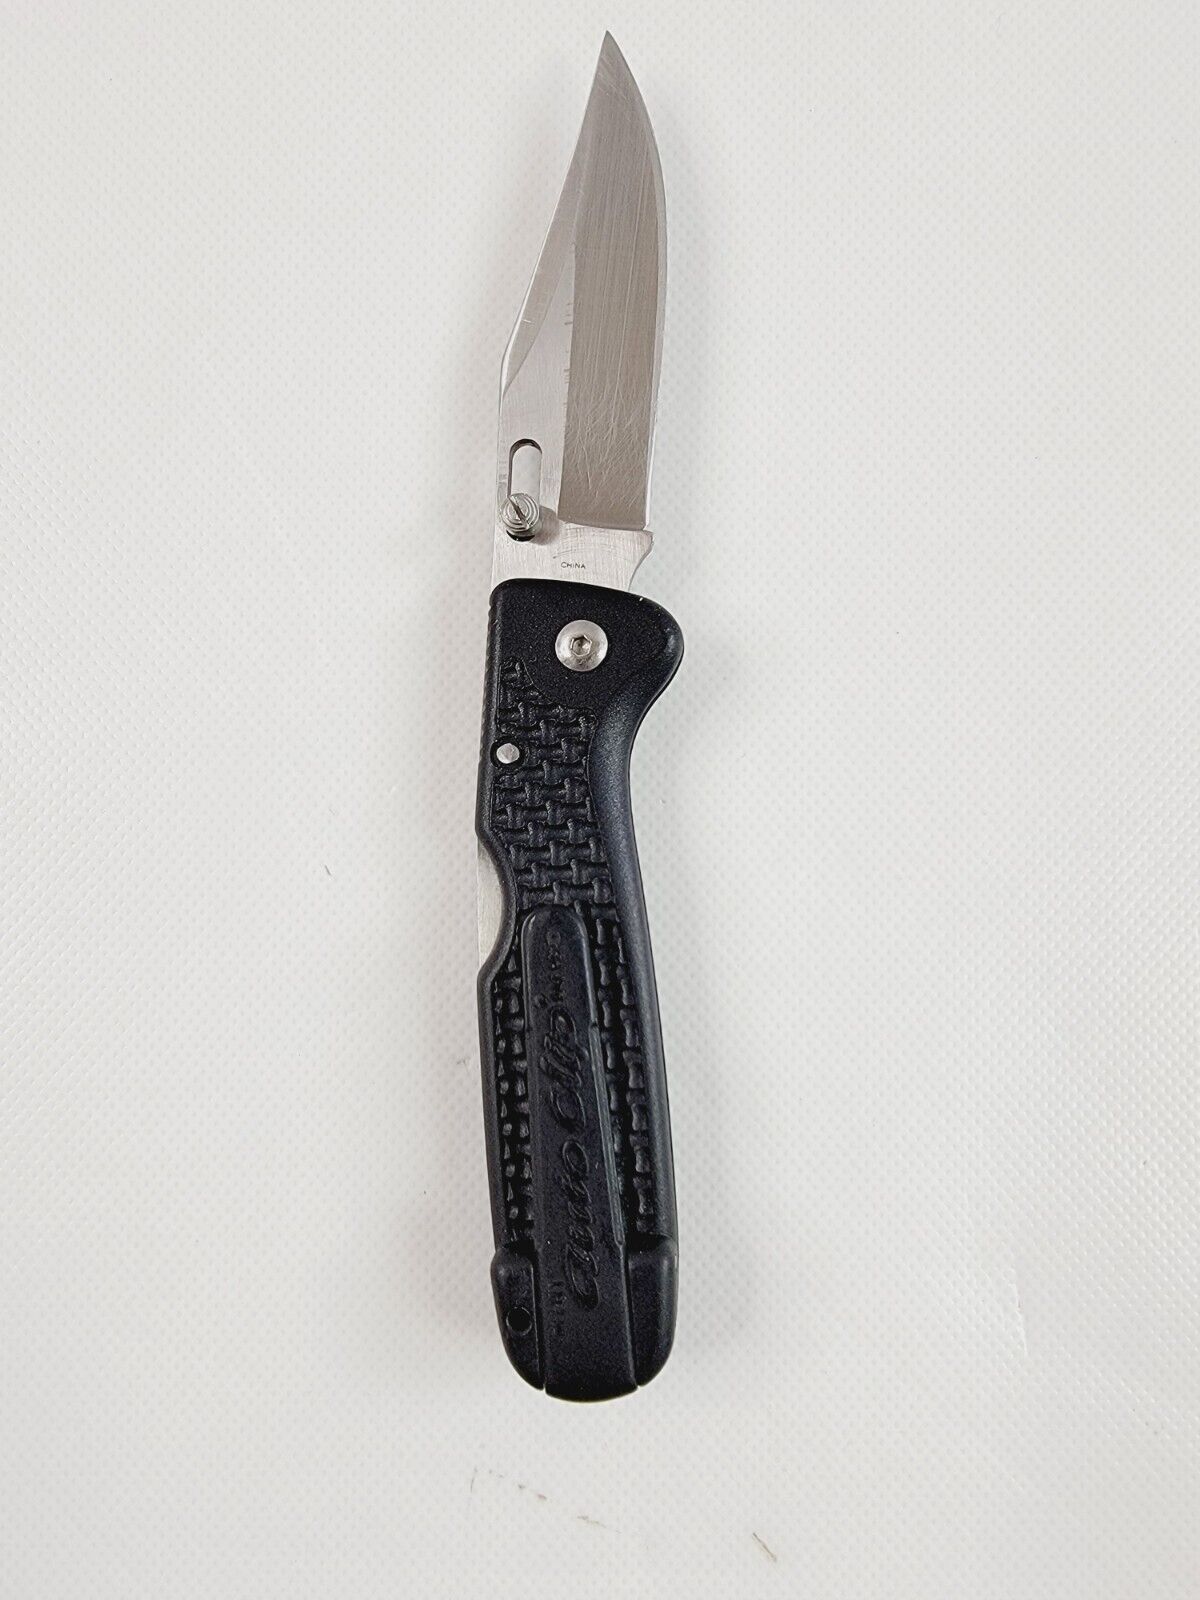 SOG Autoclip Black Lockback Folding Pocket Knife Zytel Scales w/ Fixed Belt Clip